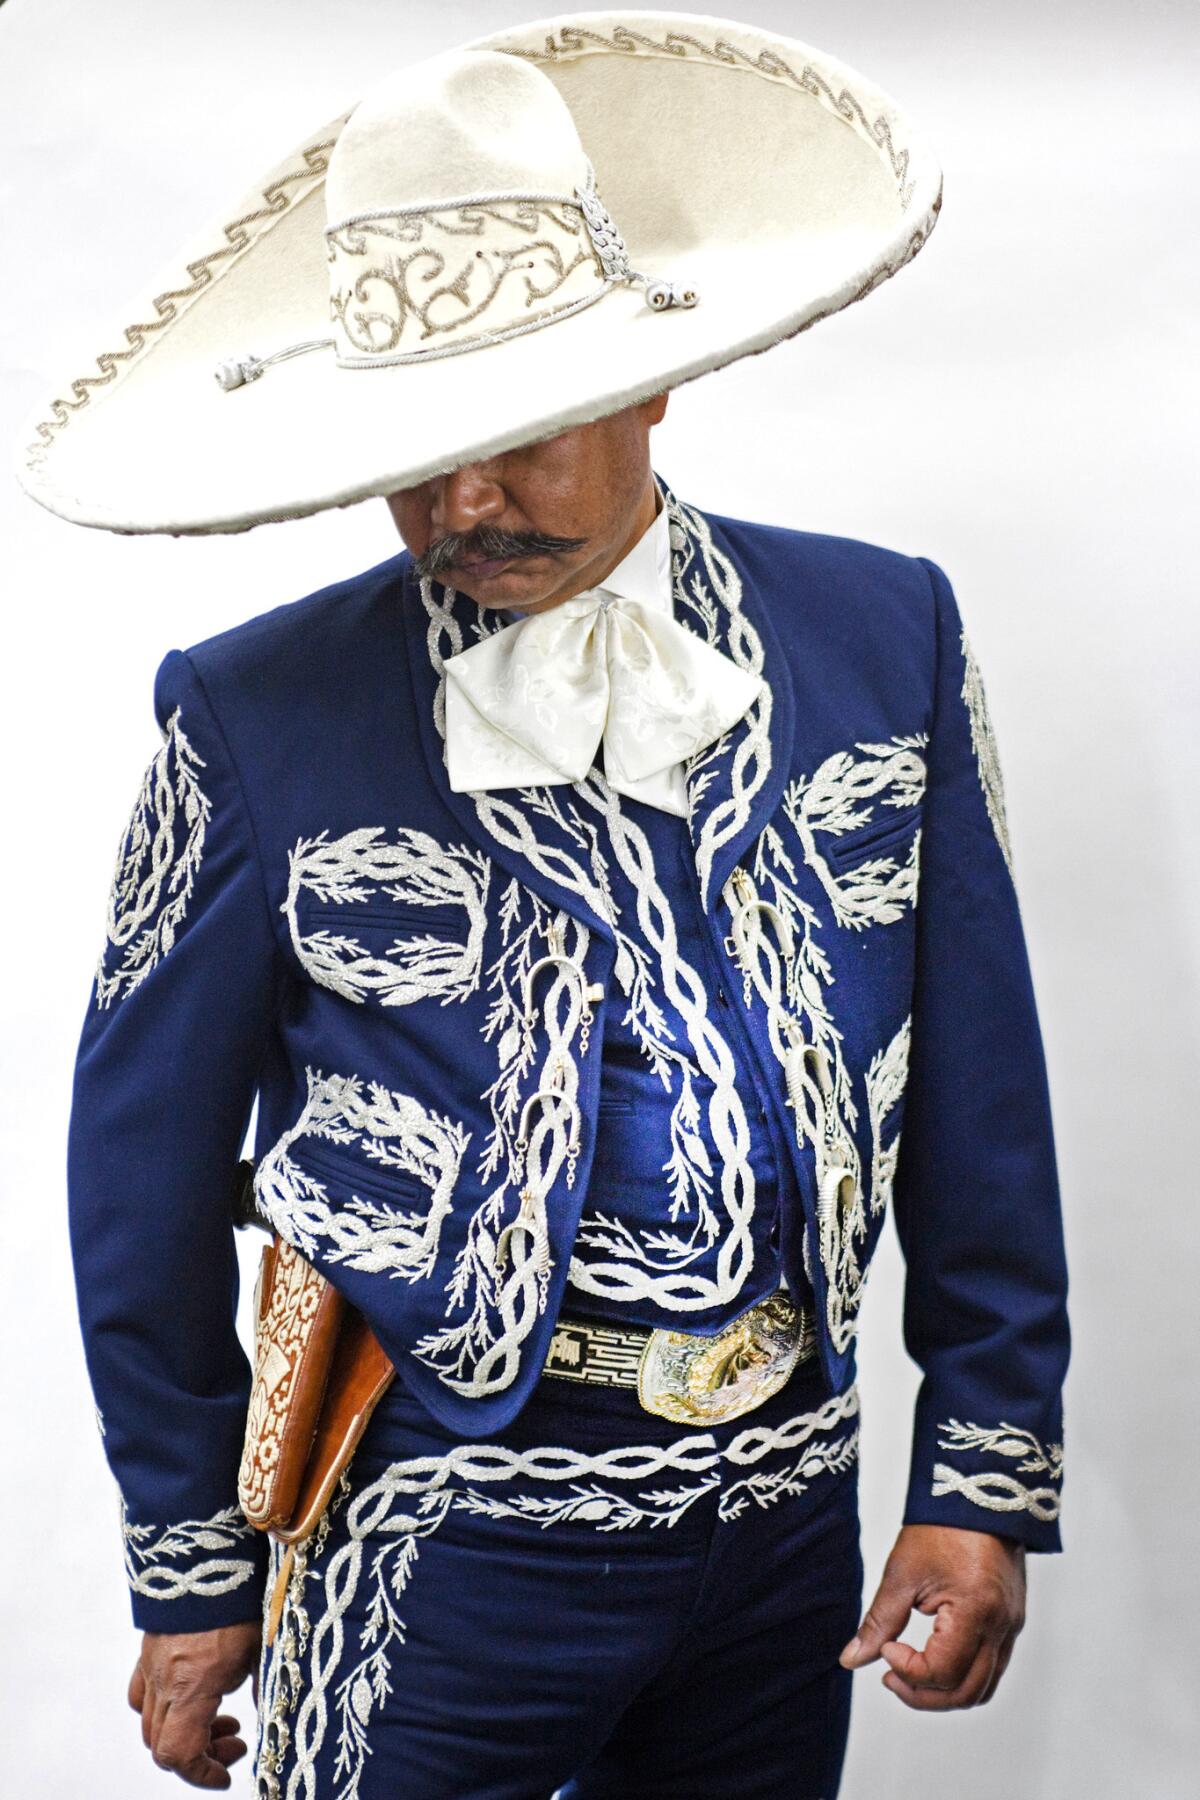 Mariachi Francisco Leyva looks gooood in his $1,300 Tello suit.